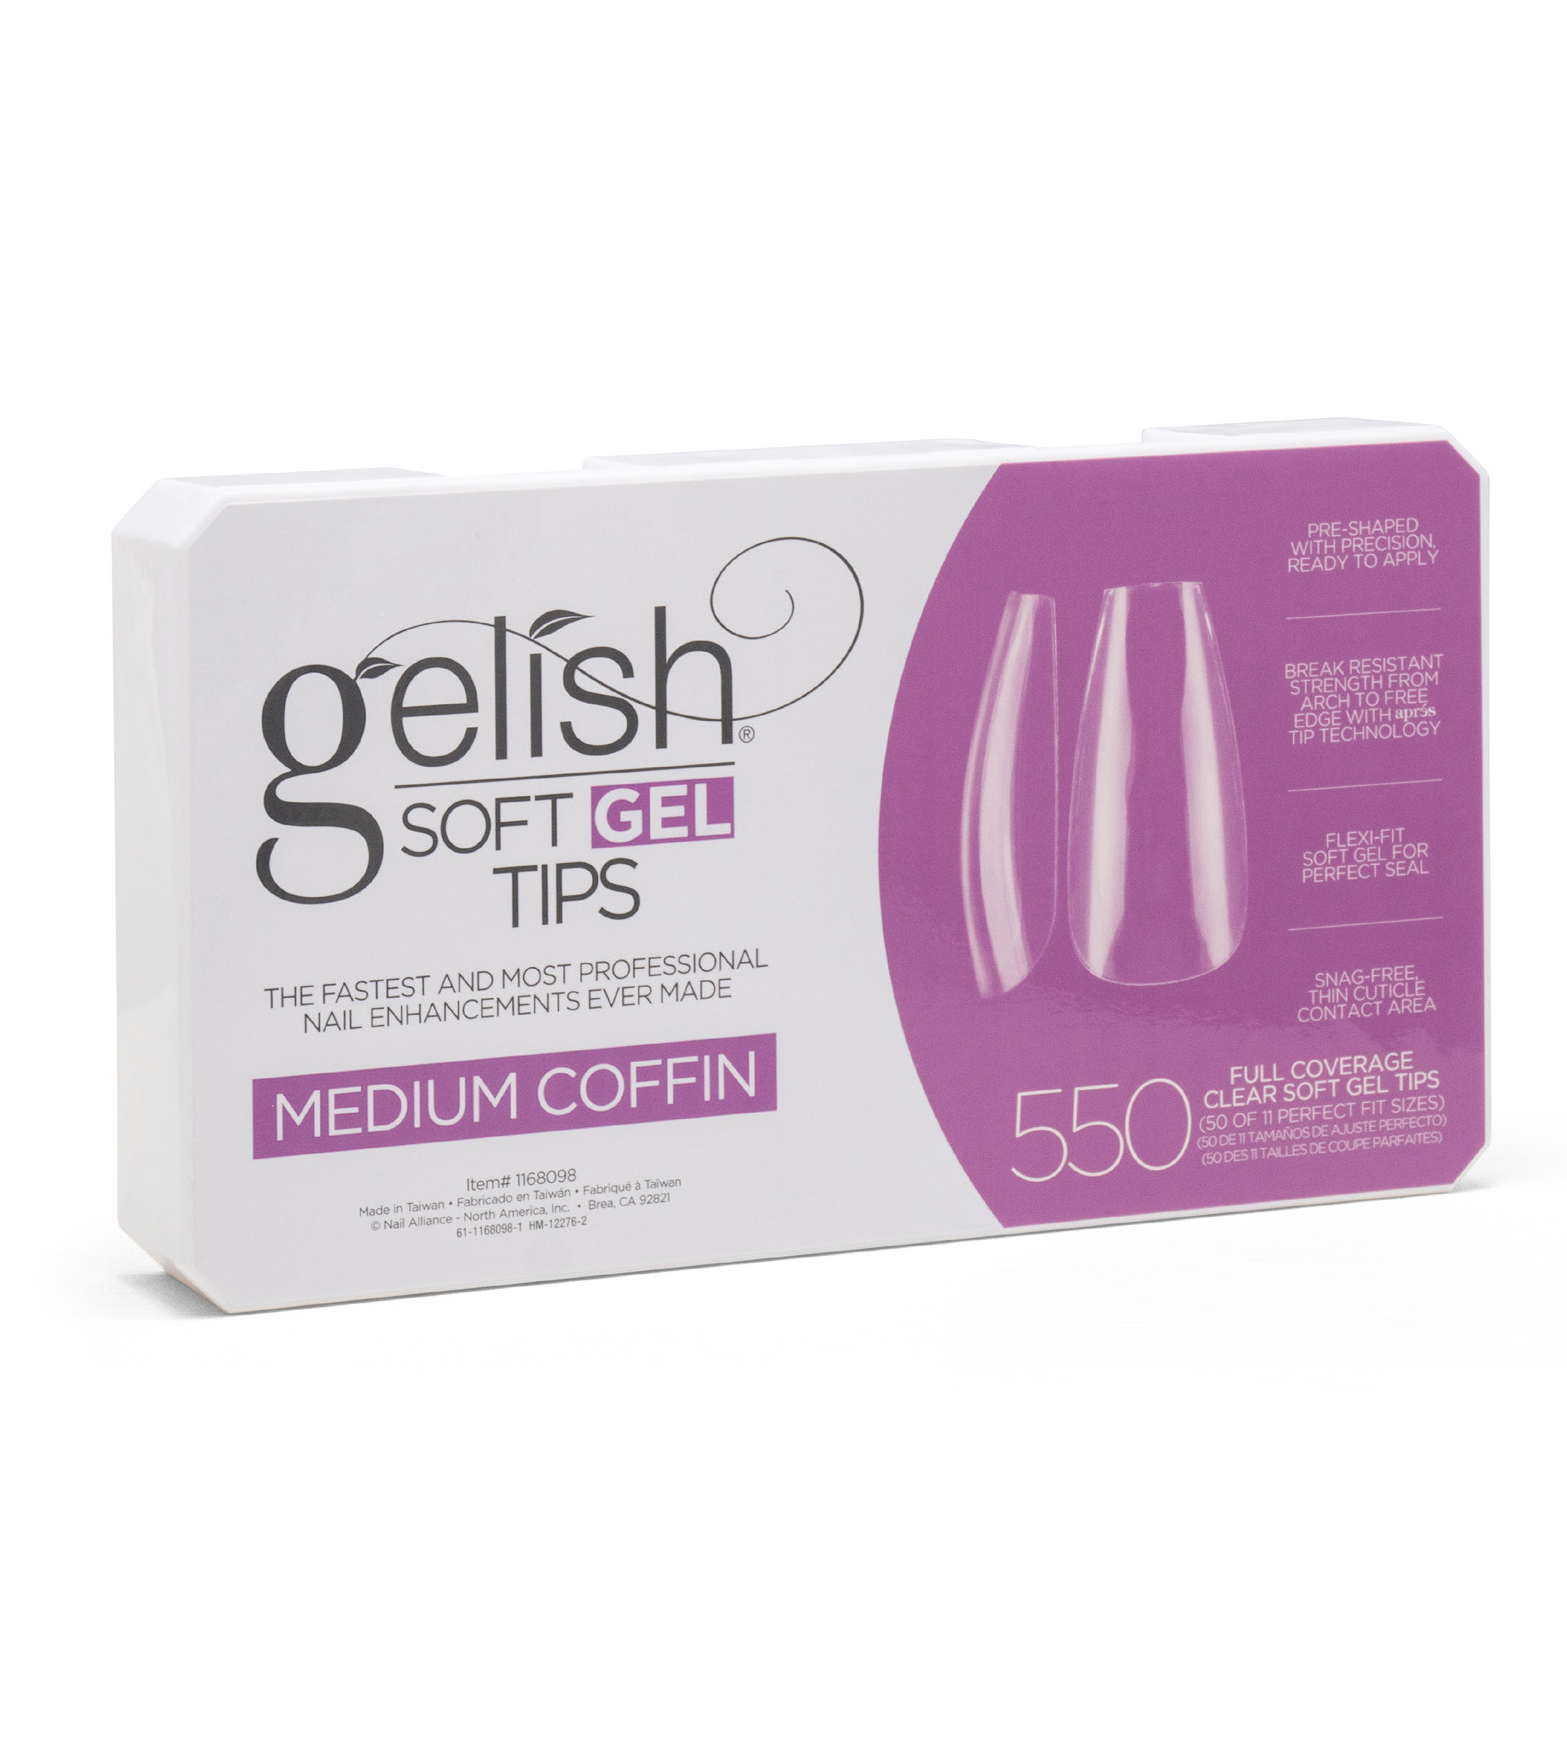 Embouts MEDIUM COFFIN Gelish® Soft Gel.